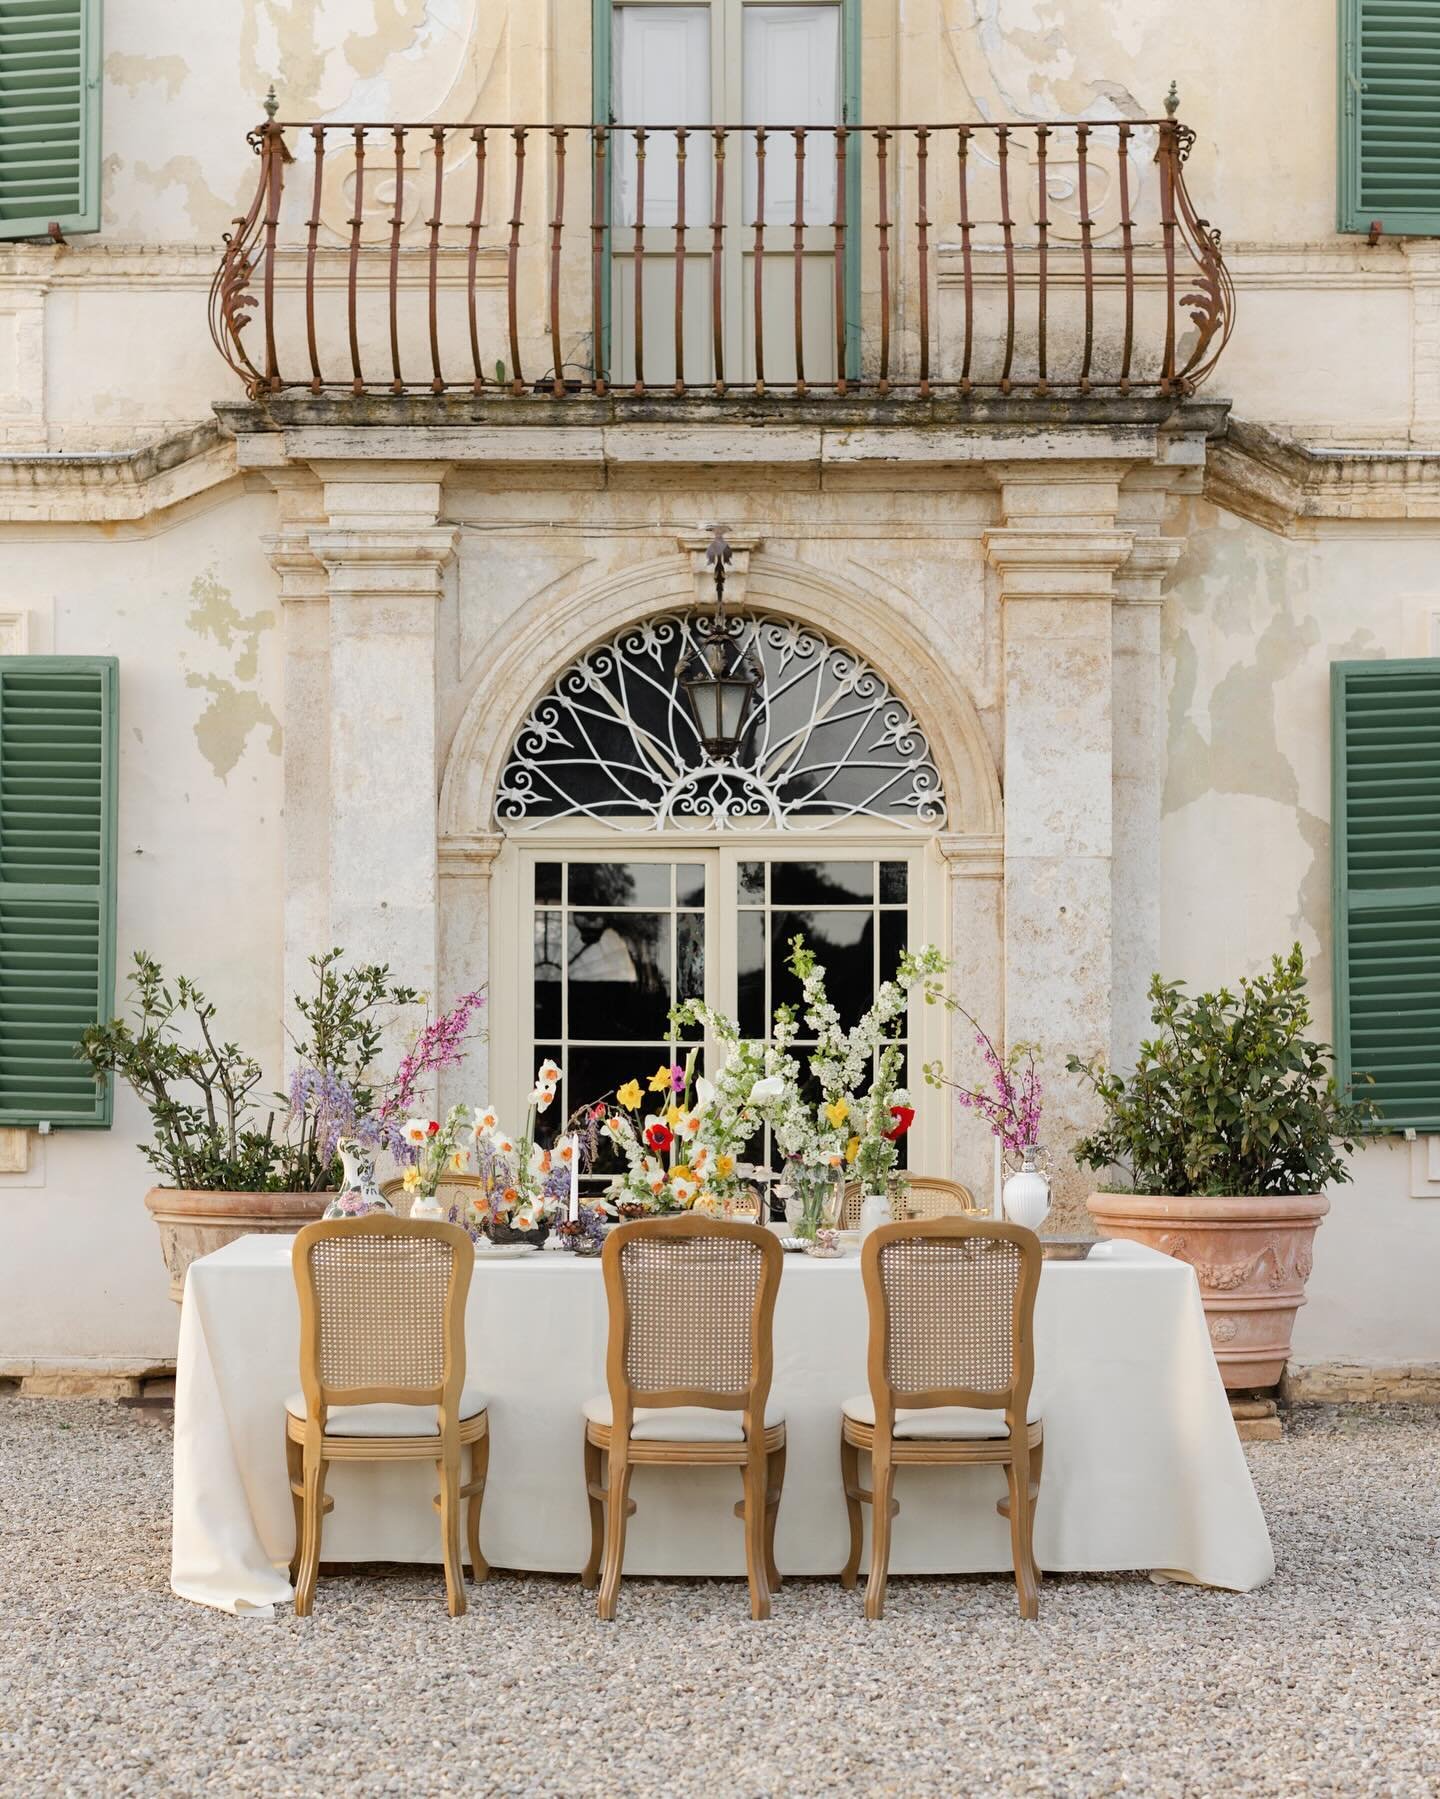 When vibrant blooms grace a rustic Italian tablescape

Decor &amp; Florals by @evgeniadragun